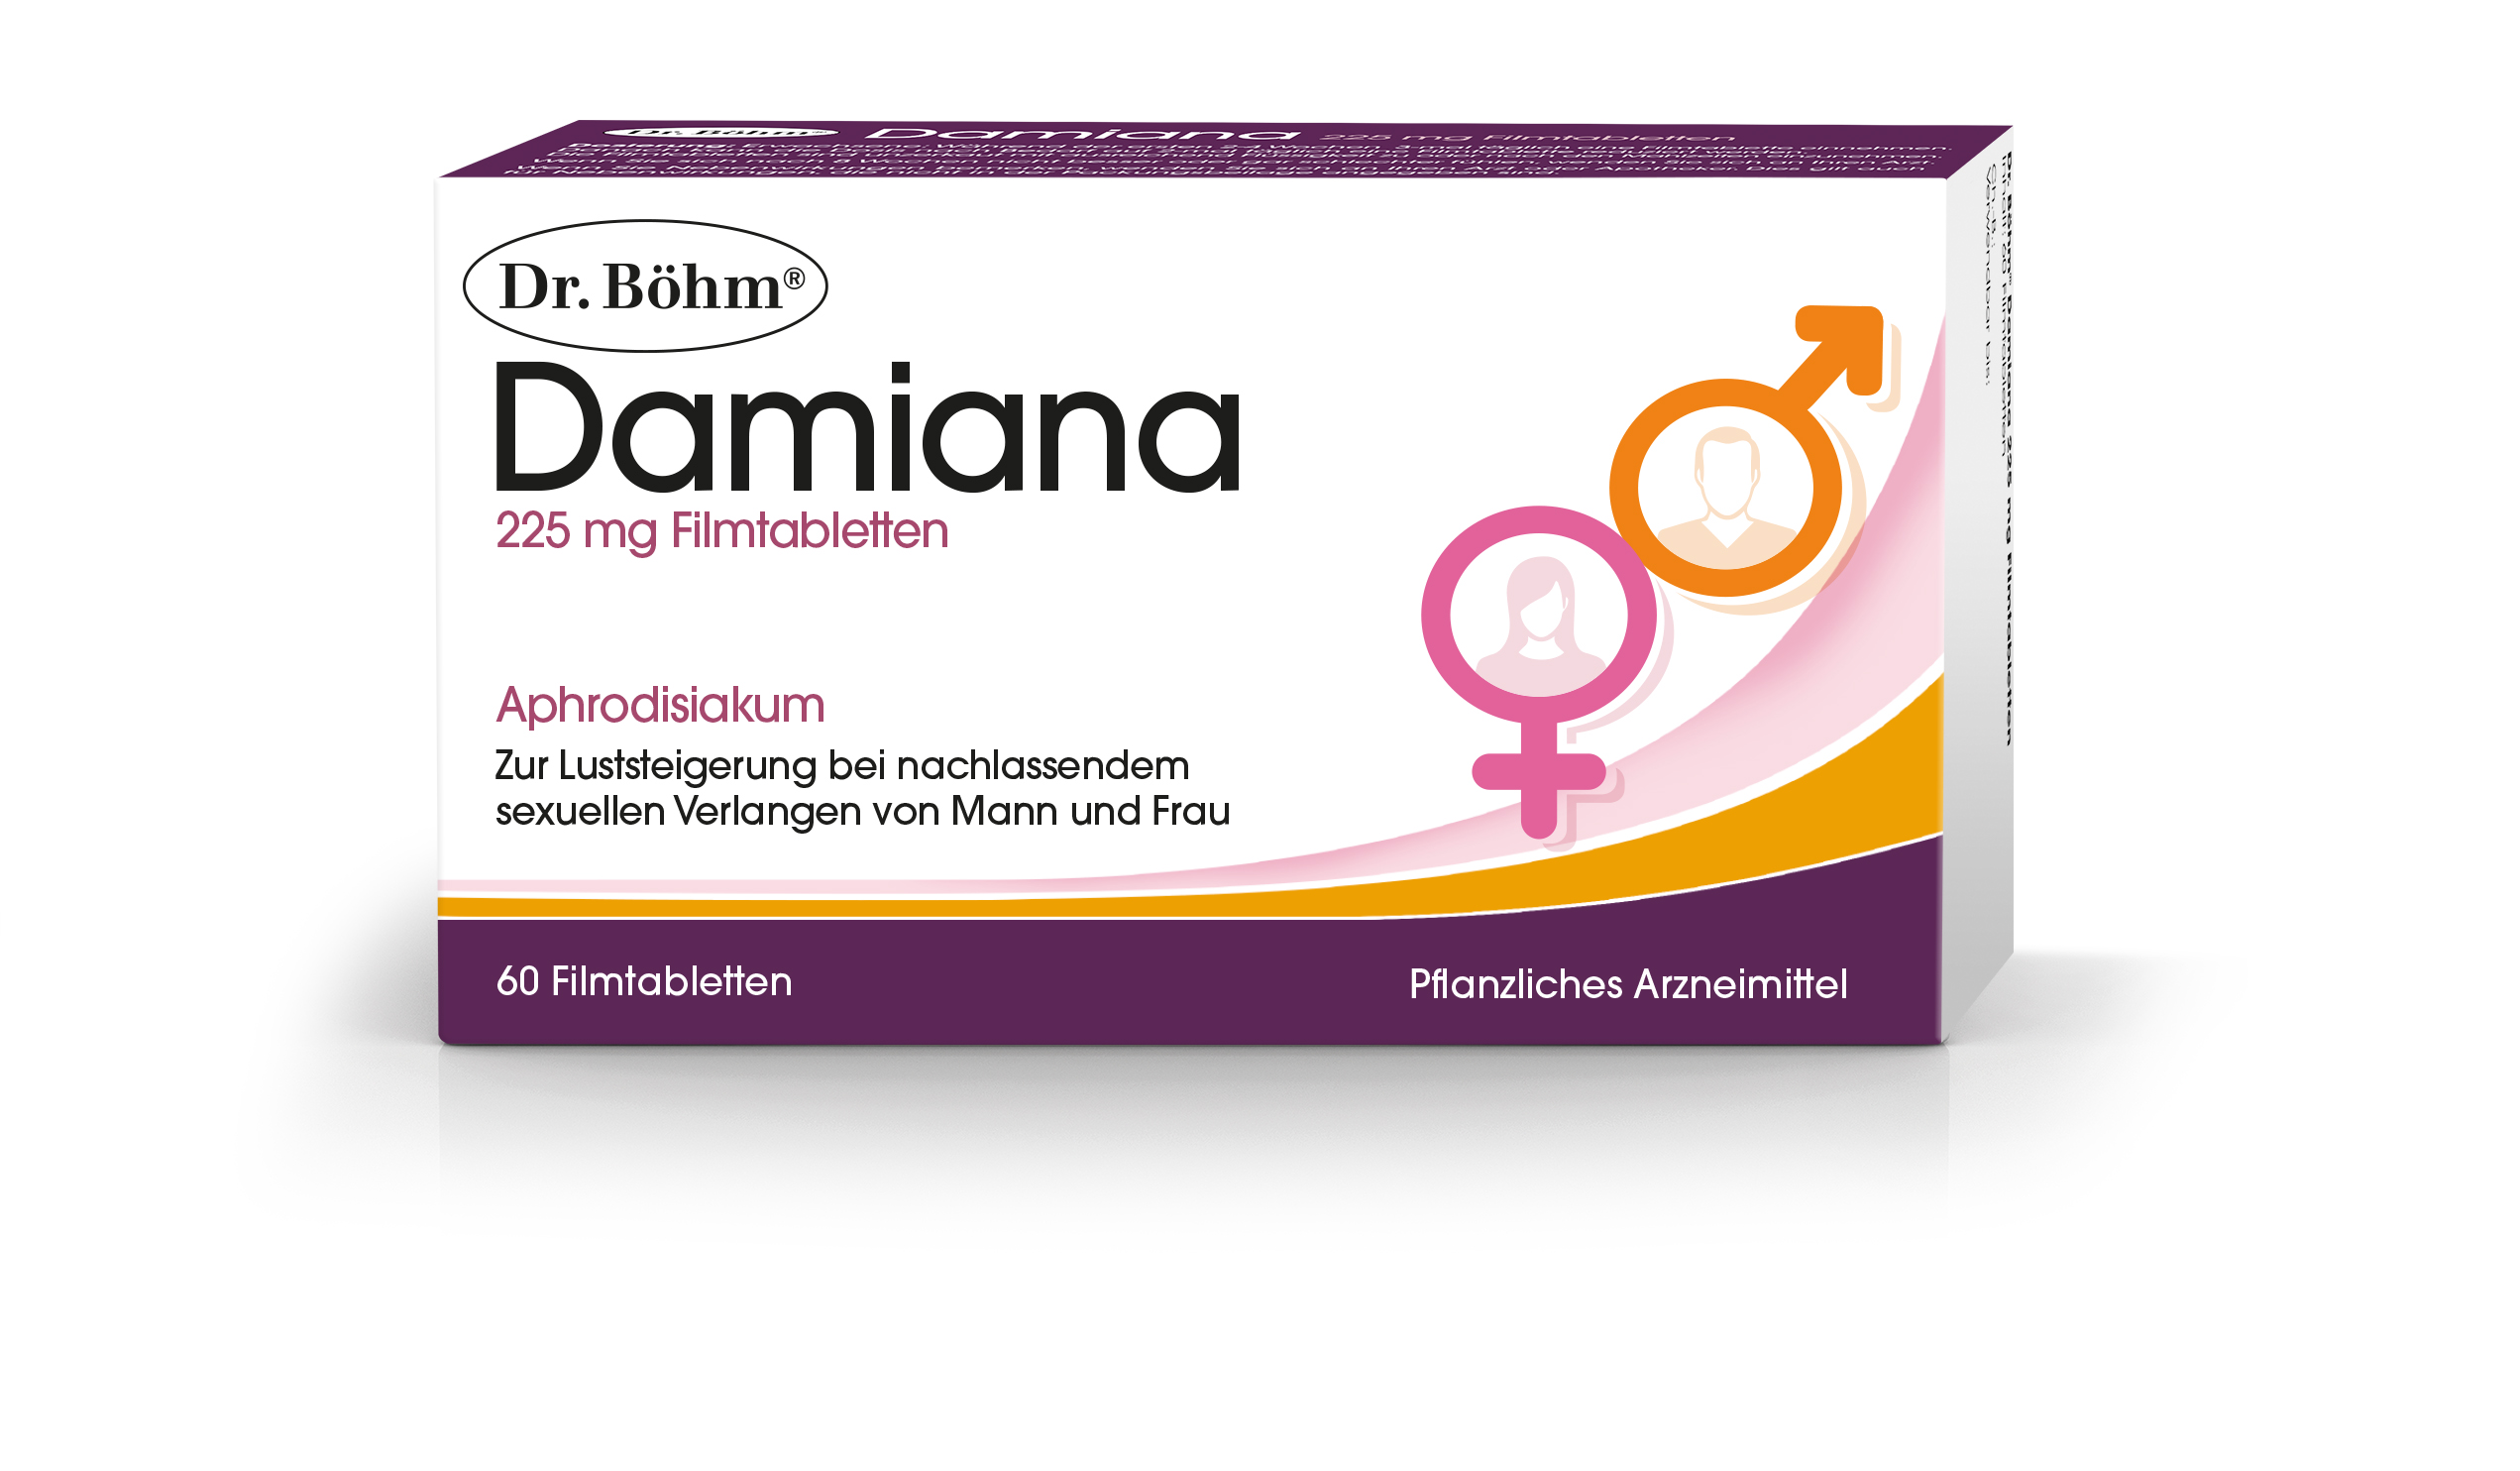 Dr. Böhm Damiana 225 mg Filmtabletten